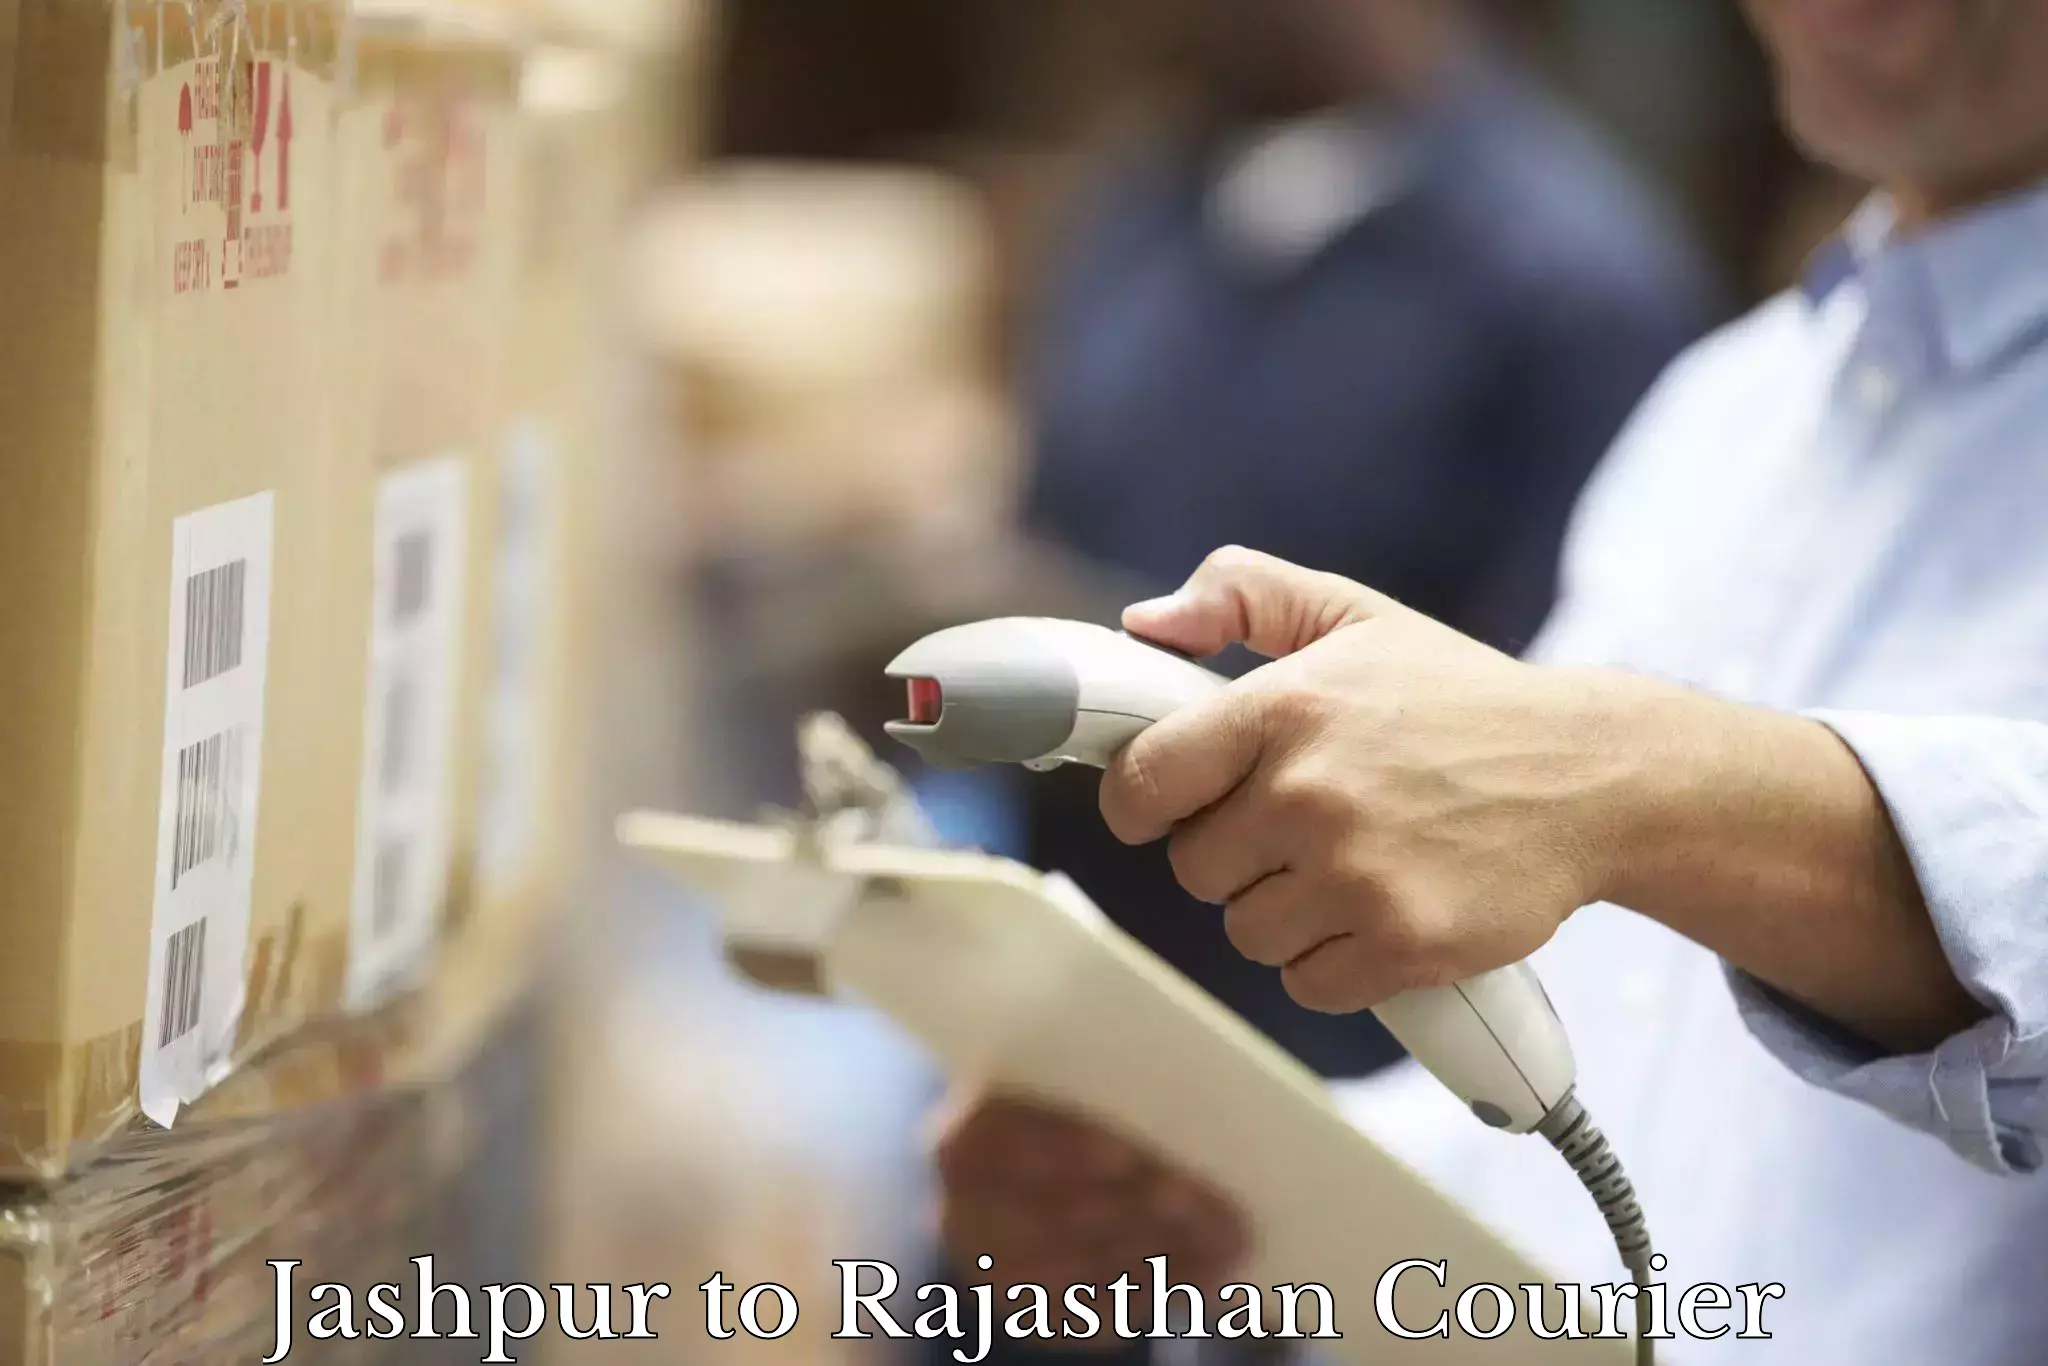 Courier service comparison Jashpur to Gogunda